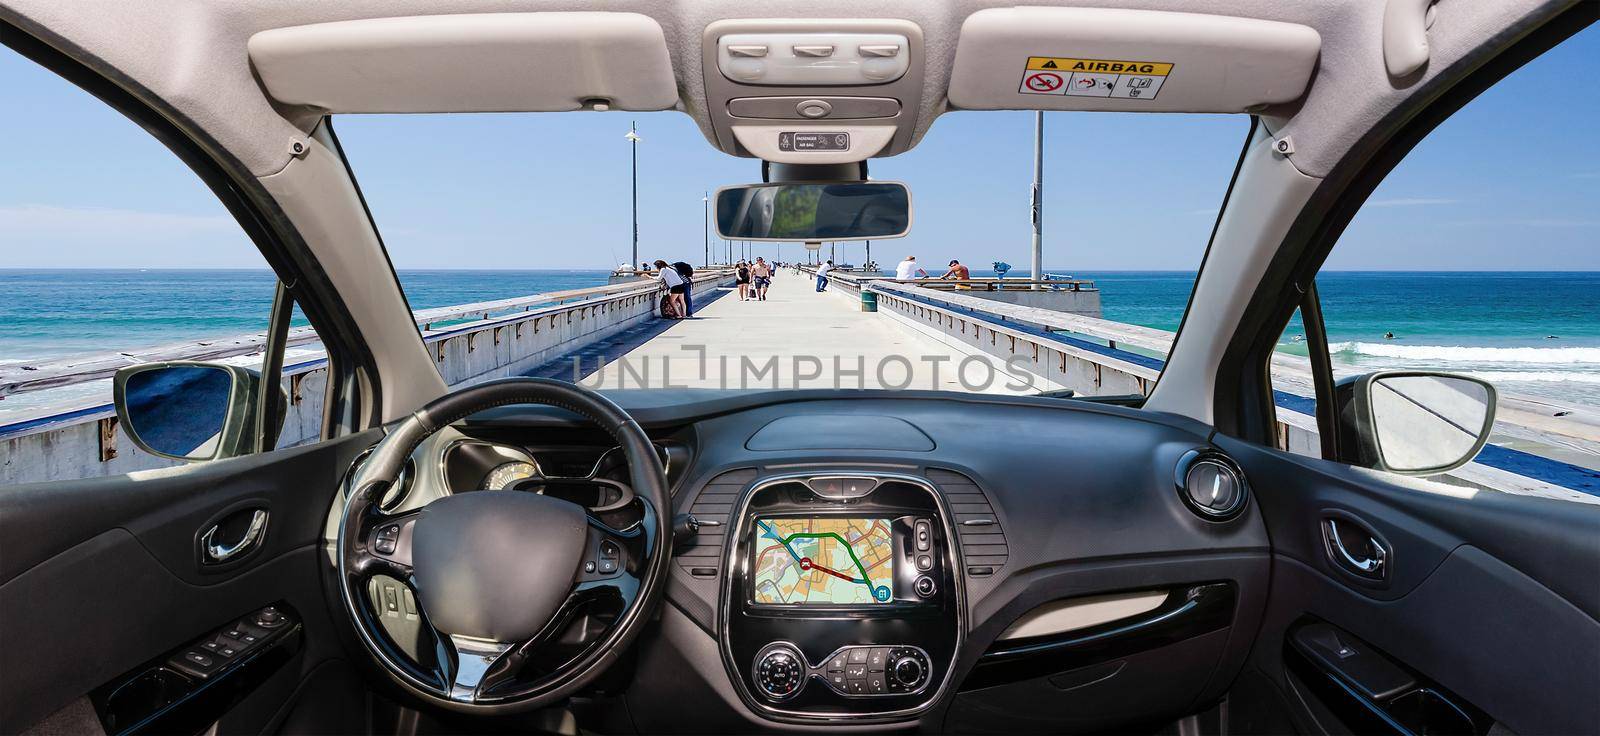 Car windshield with view of Venice Beach Pier, California, USA by marcorubino